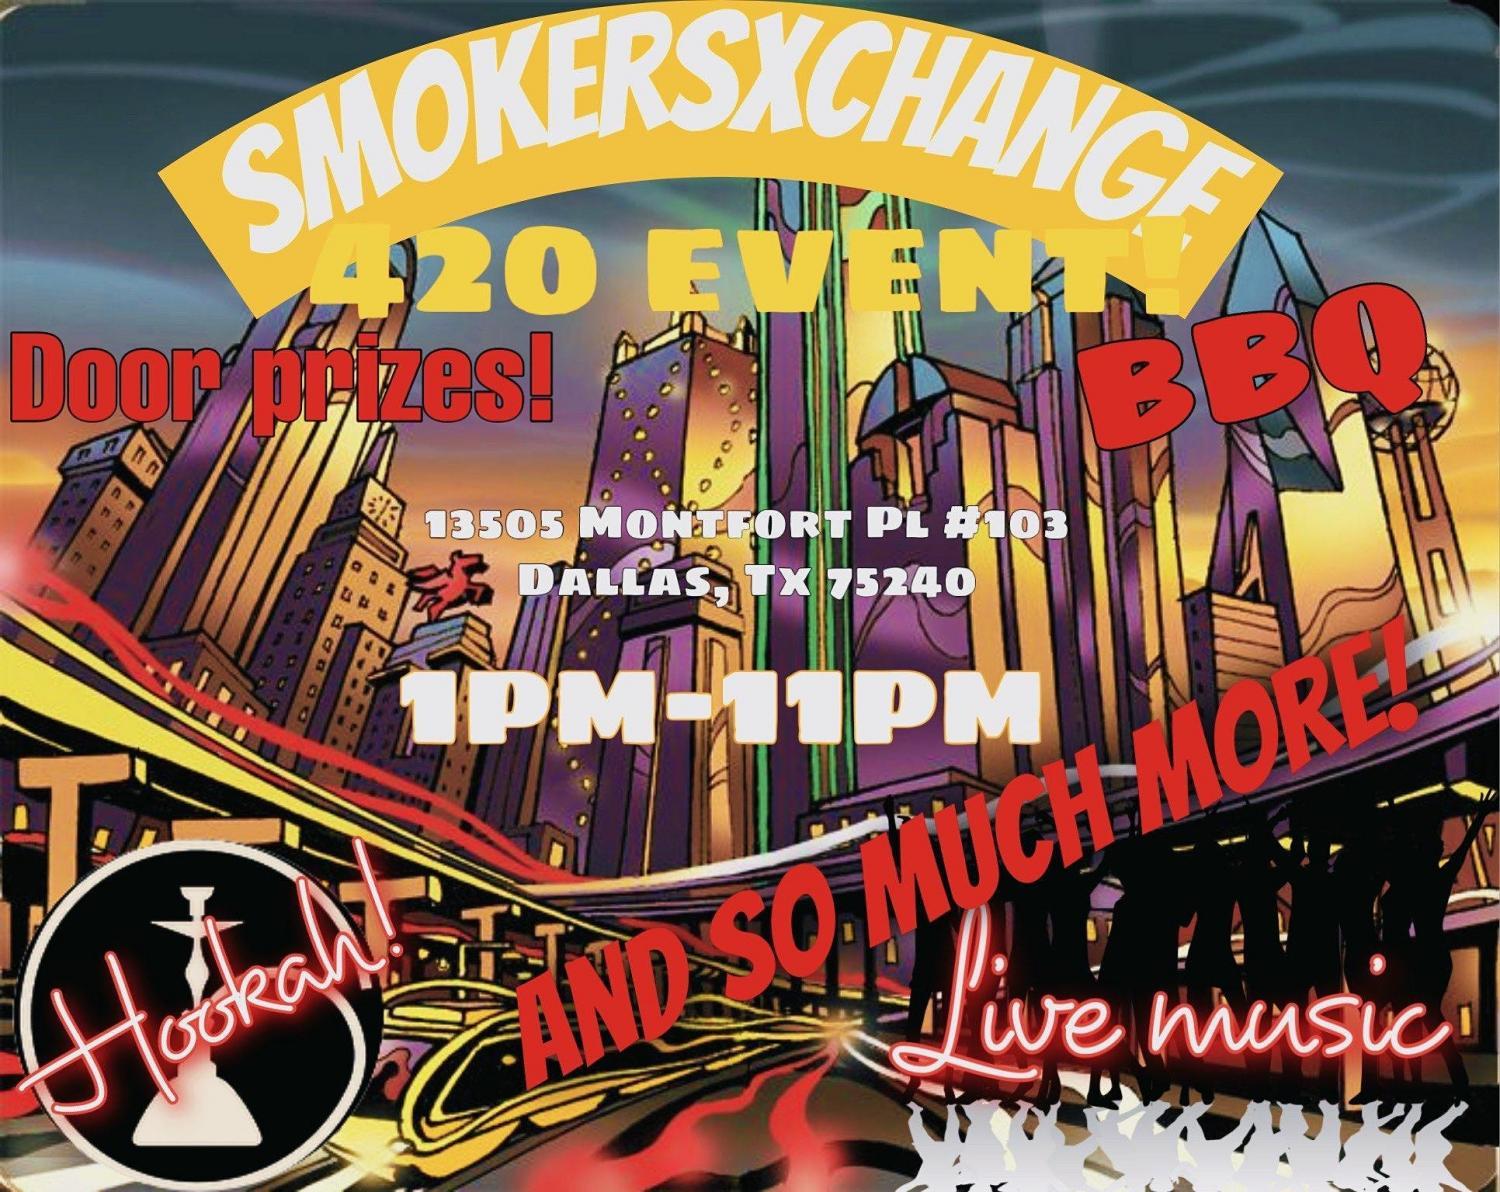 Smokersxchange 420 Festival